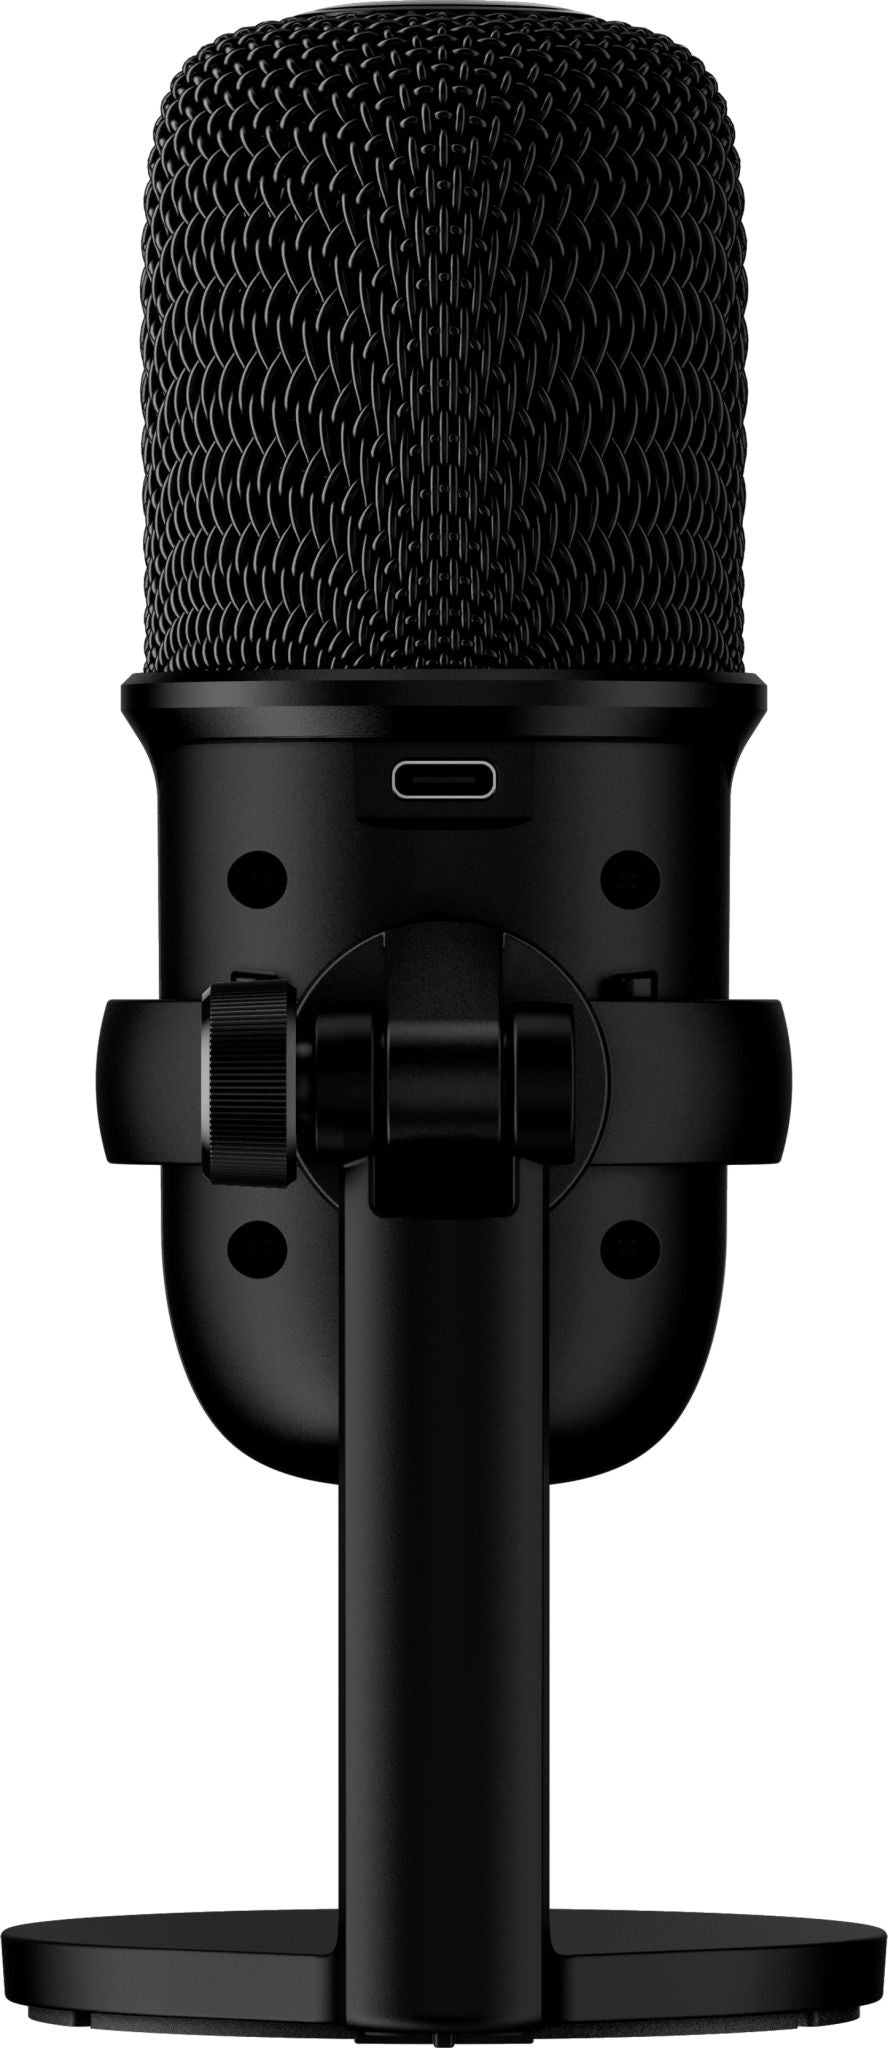 HyperX SoloCast - USB Microphone (Black) PC microphone